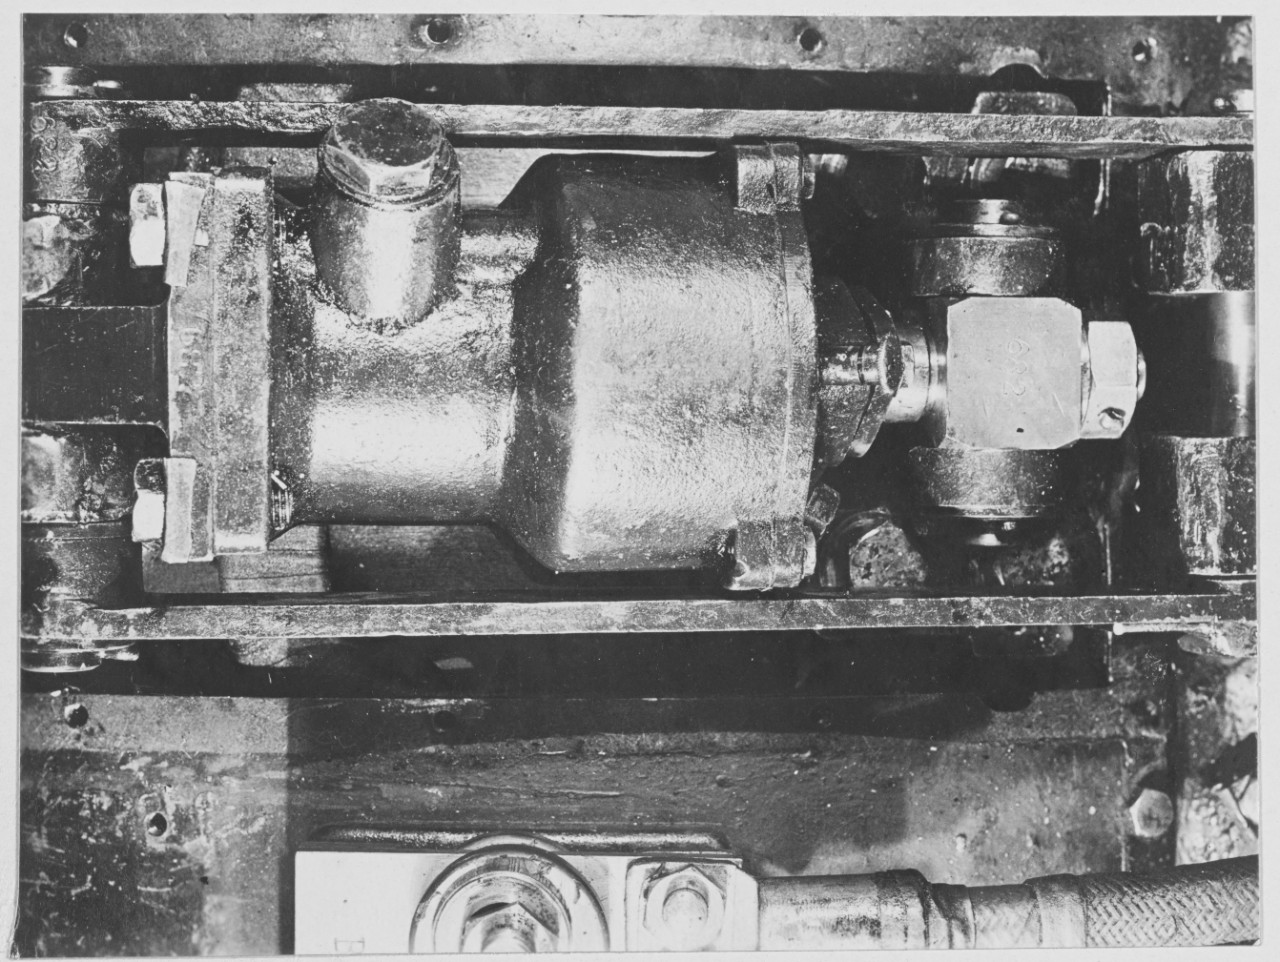 Machinery  on U-boat